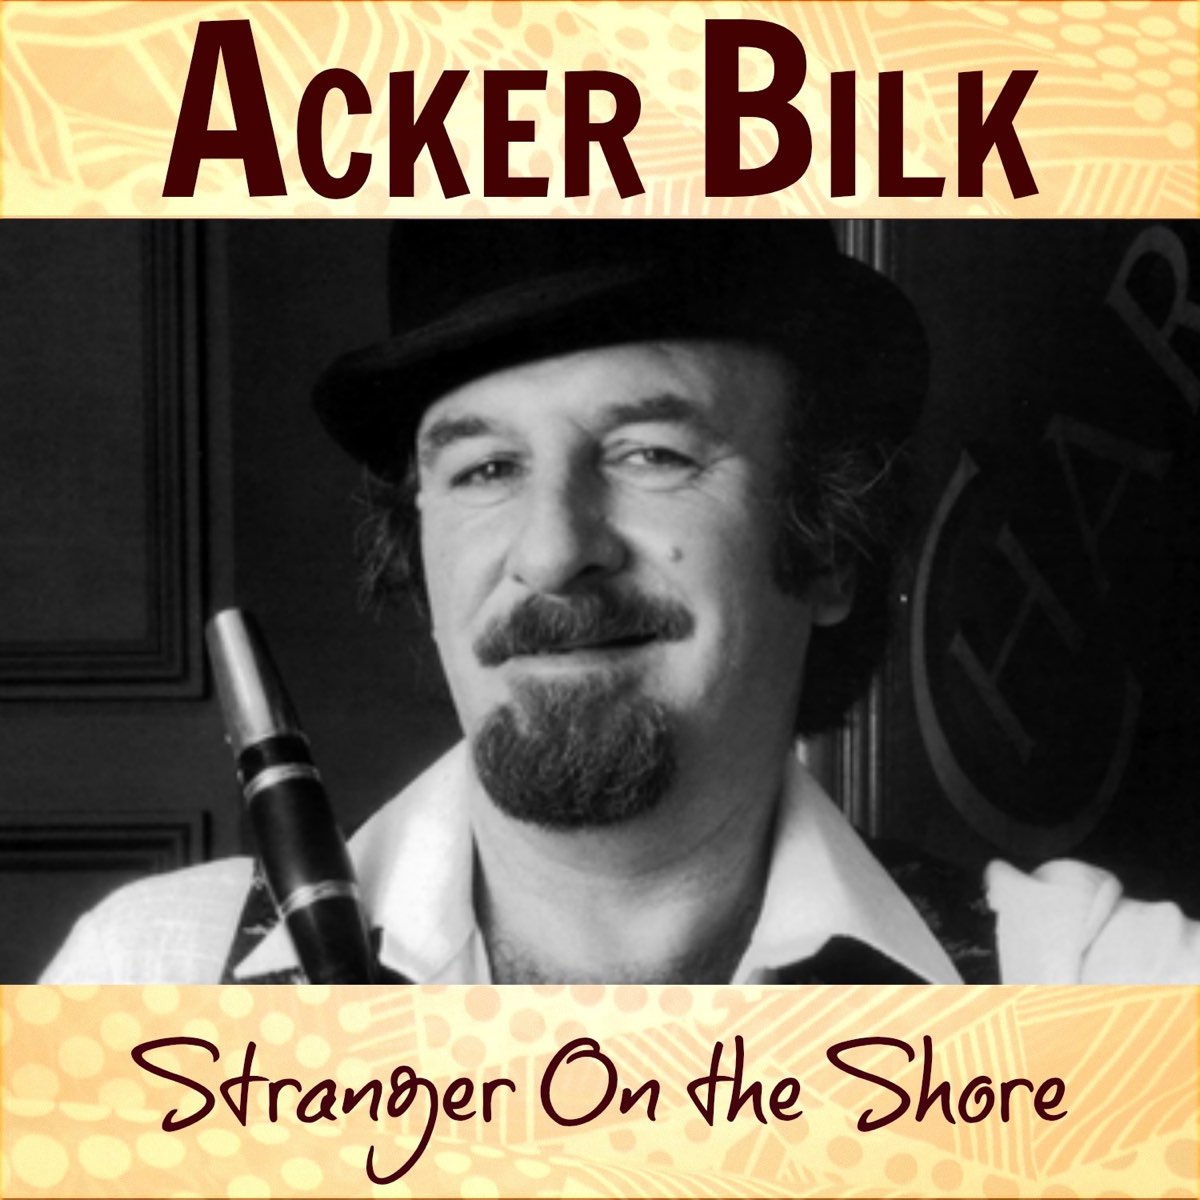 Акер Билк альбомы. Stranger on the Shore. The Greatest Hits of Acker Bilk CD. Левый берег песня слушать